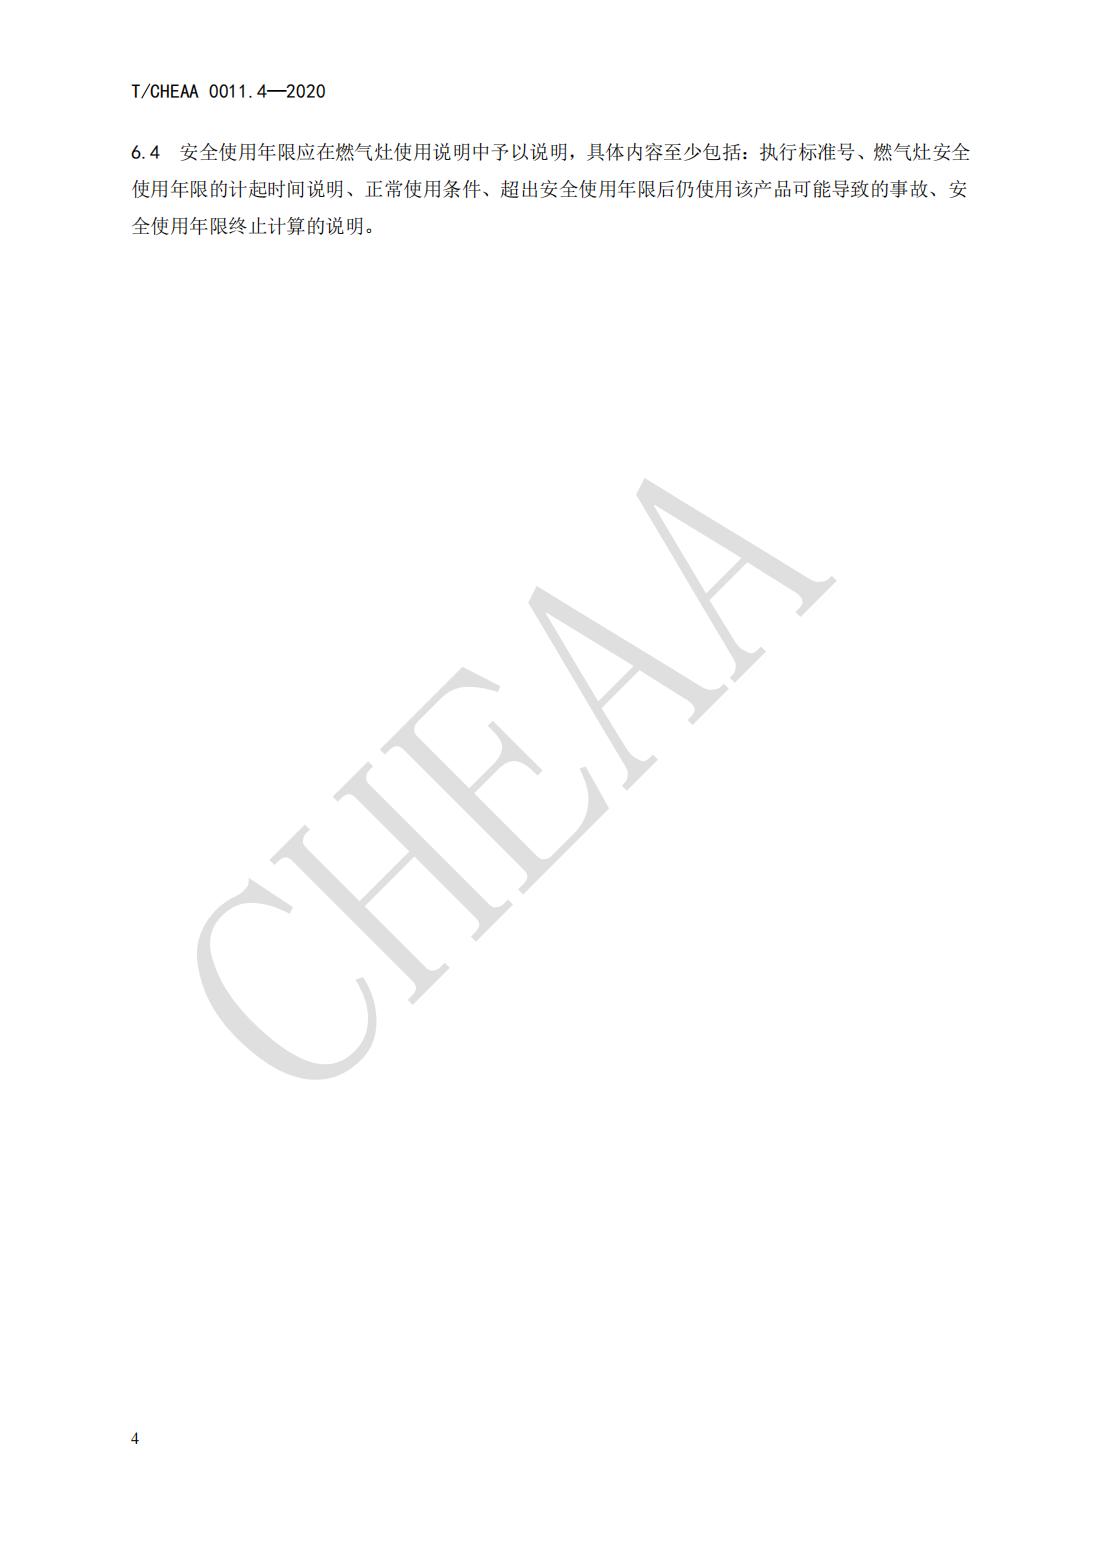 T CHEAA 0011.4-2020《家用电器安全使用年限 第4部分：家用燃气灶》(图10)